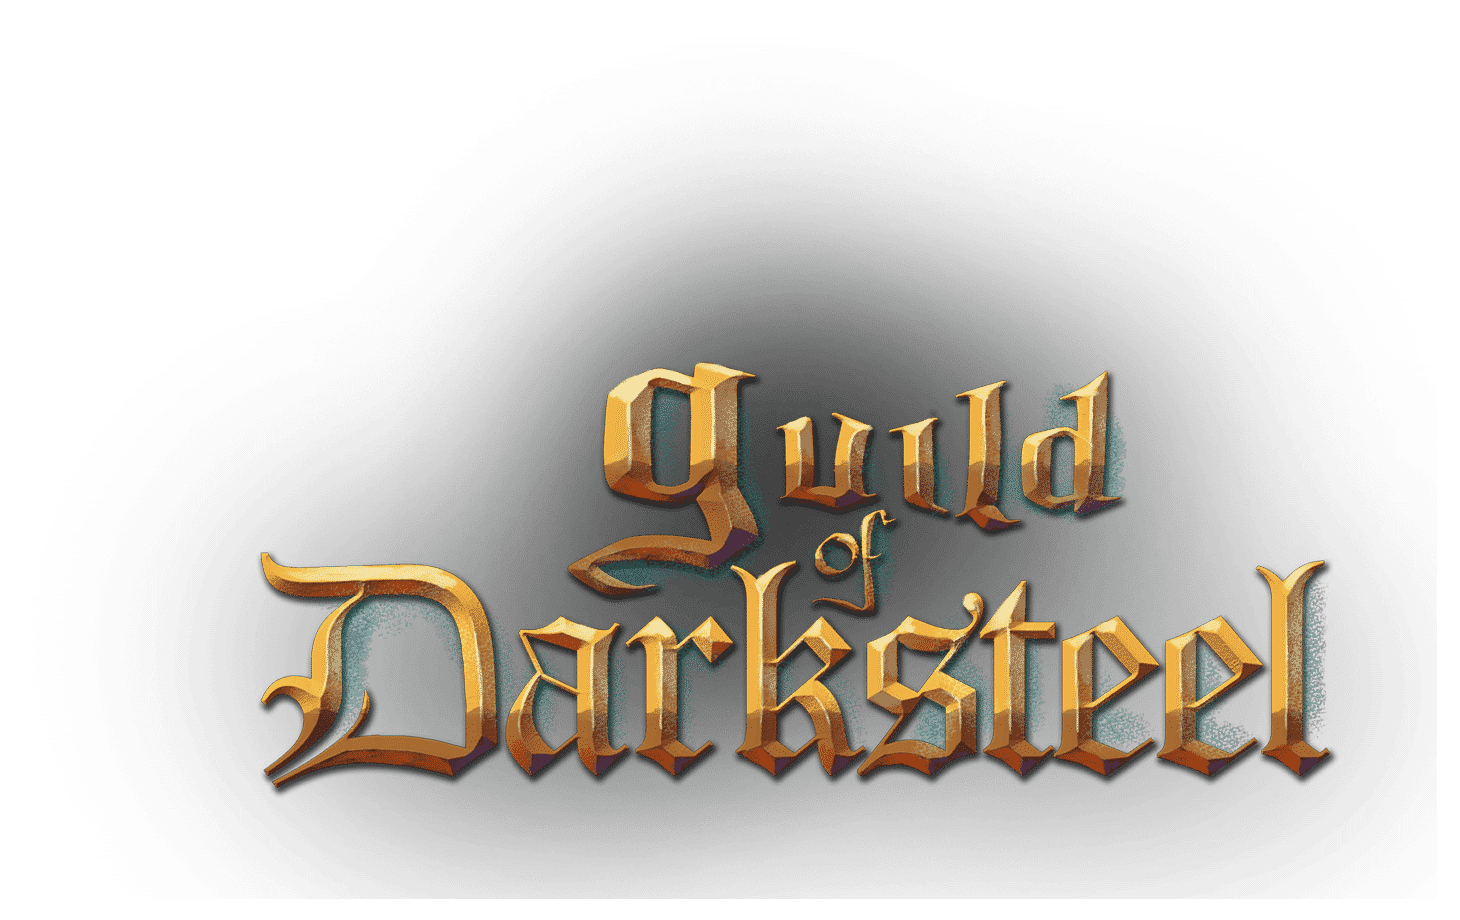 guild of darksteel logo